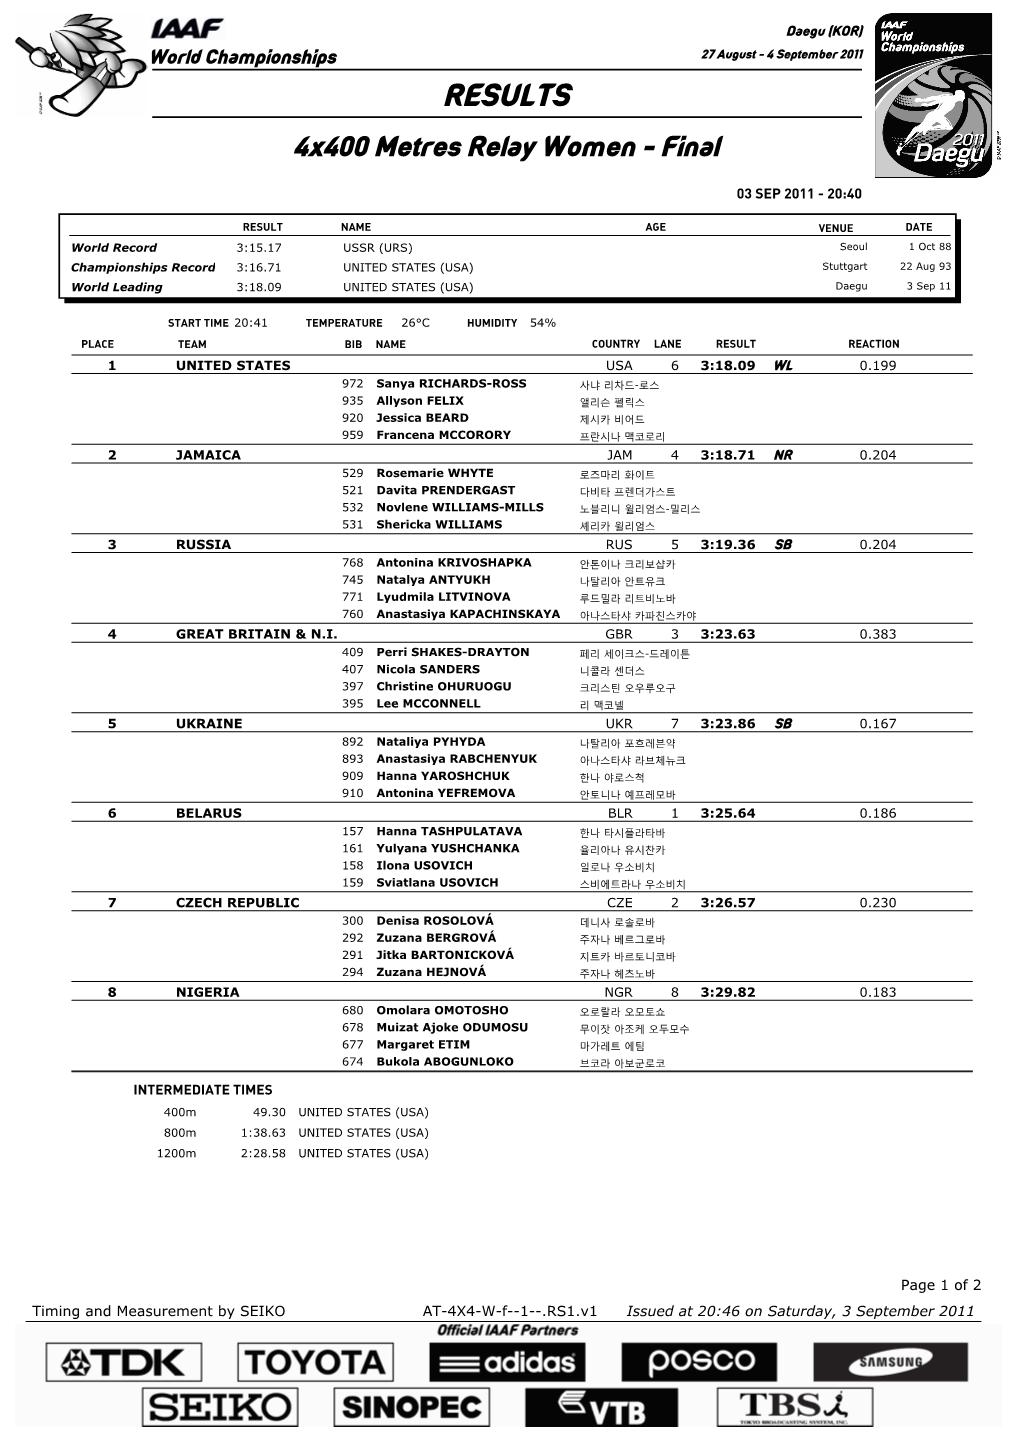 RESULTS 4X400 Metres Relay Women - Final